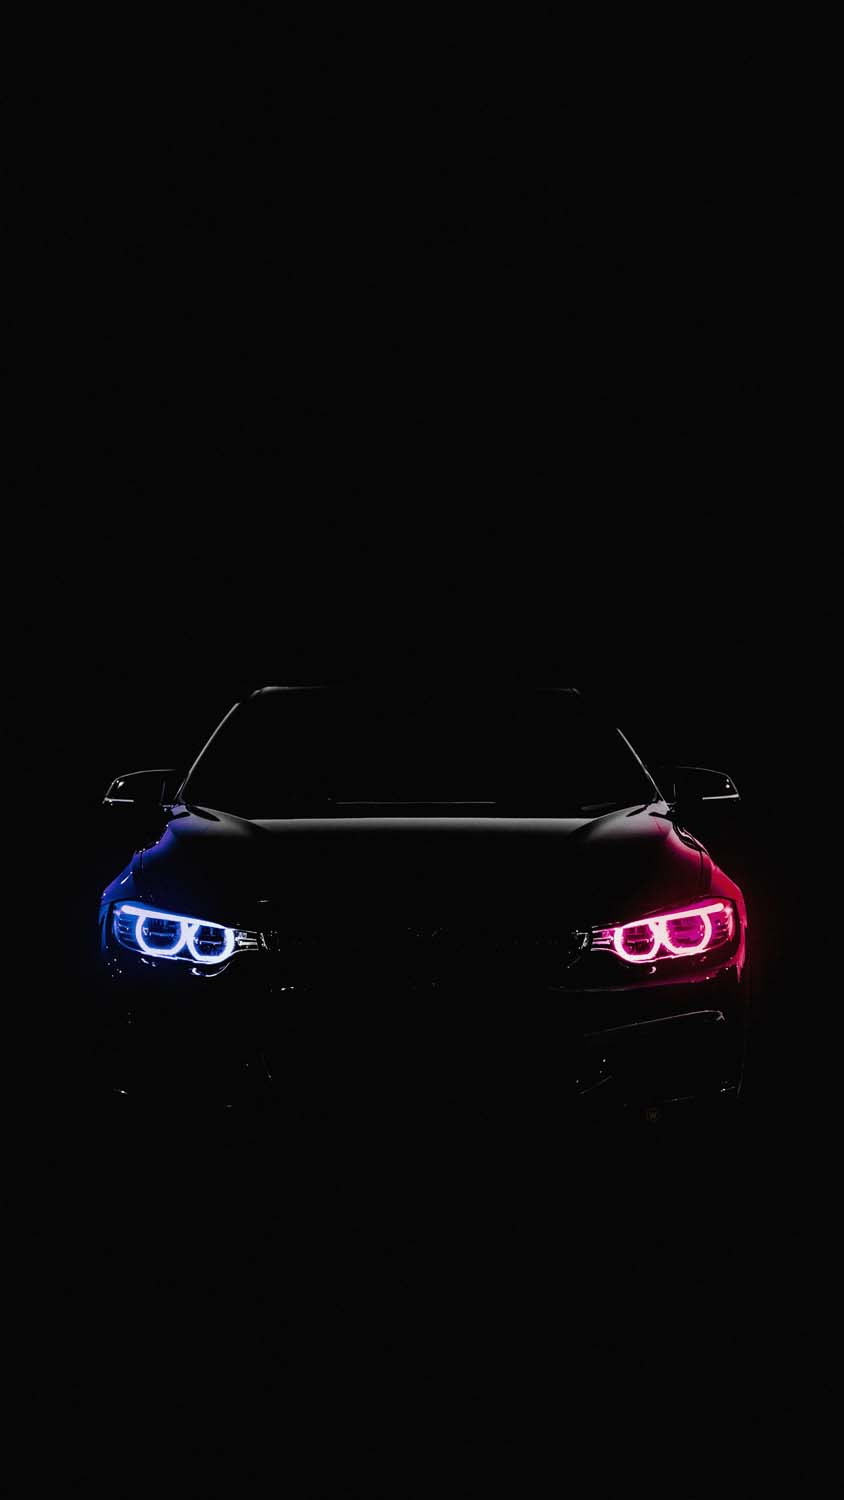 BMW Lights in Dark iPhone Wallpaper HD